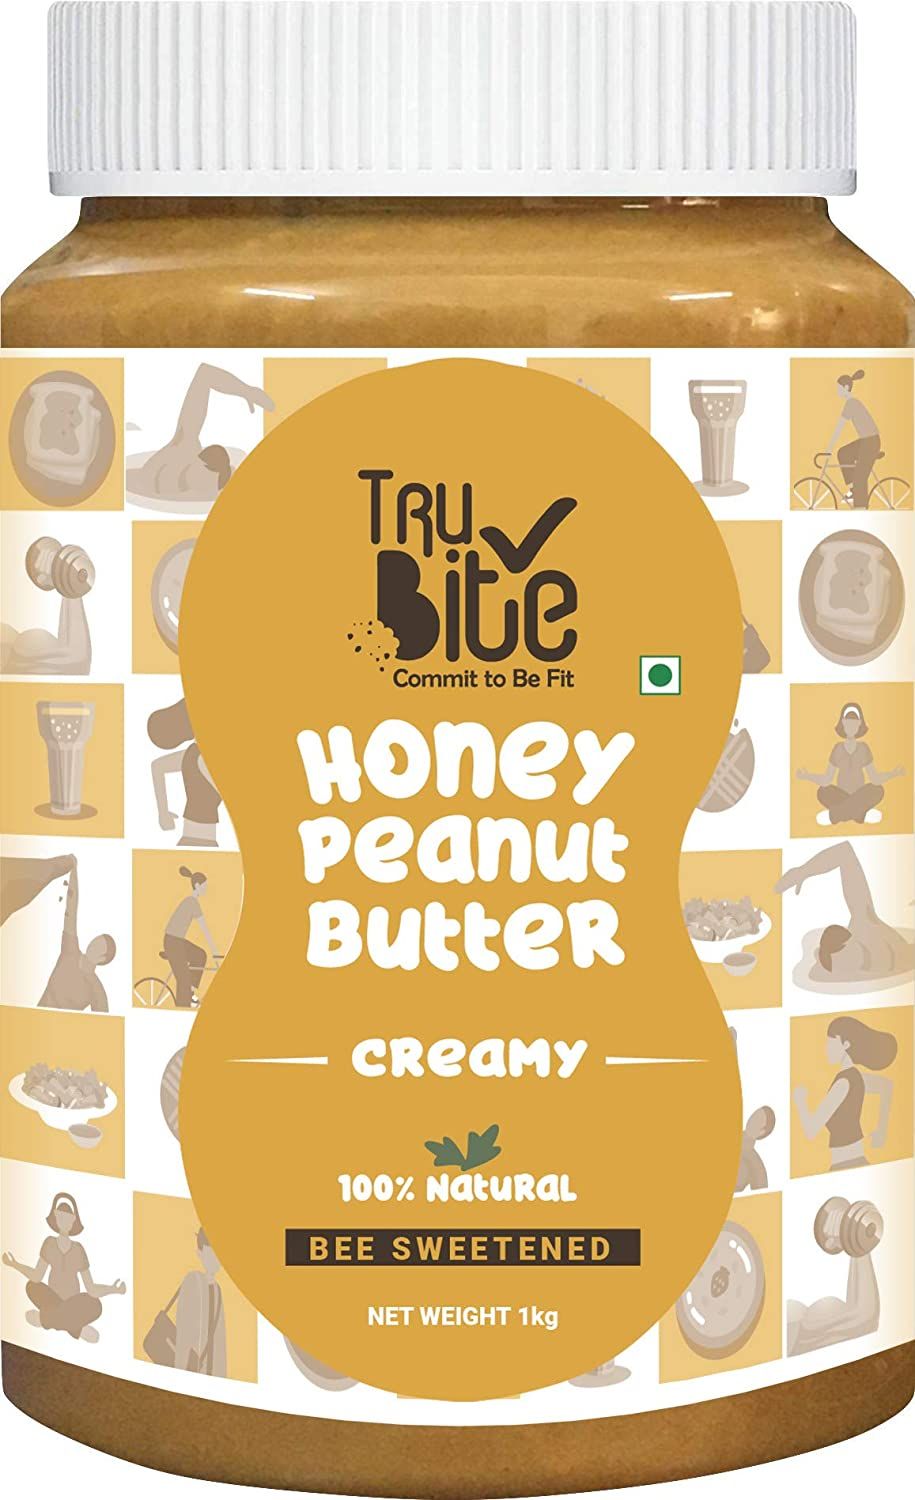 Trubite Honey Peanut Butter Creamy Image